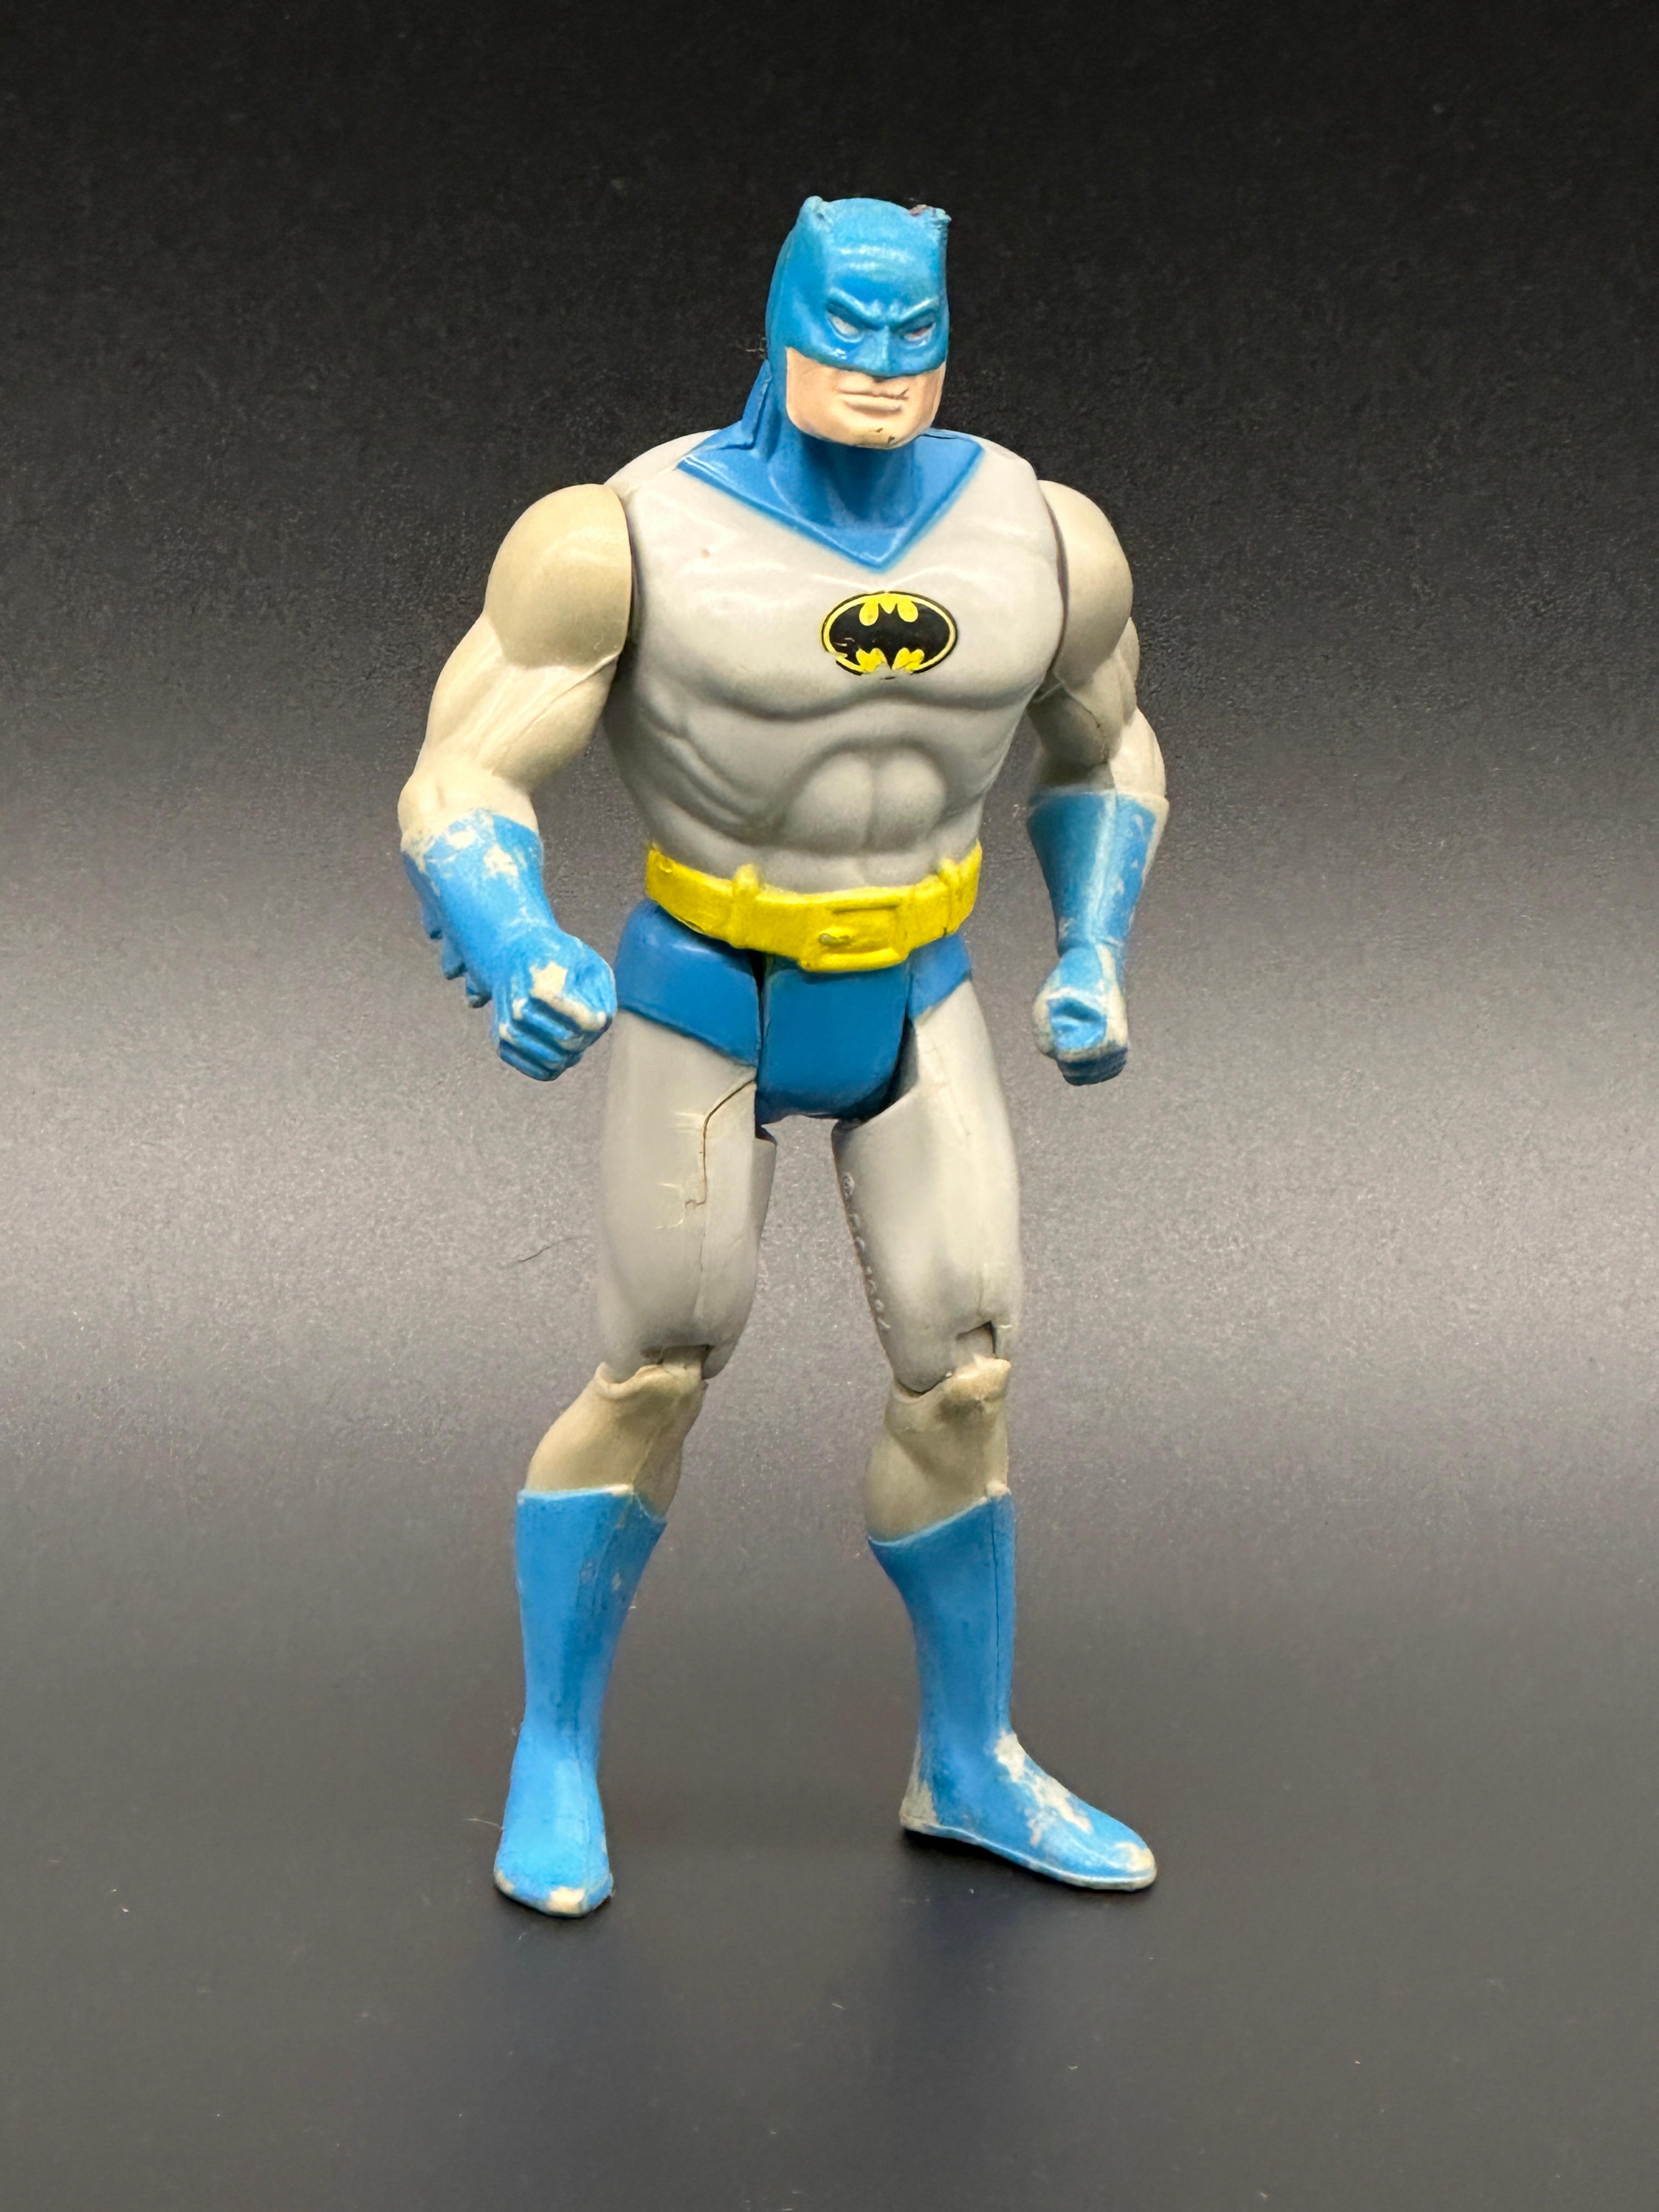 Vintage Superhero BATMAN and SPIDERMAN Action Figures